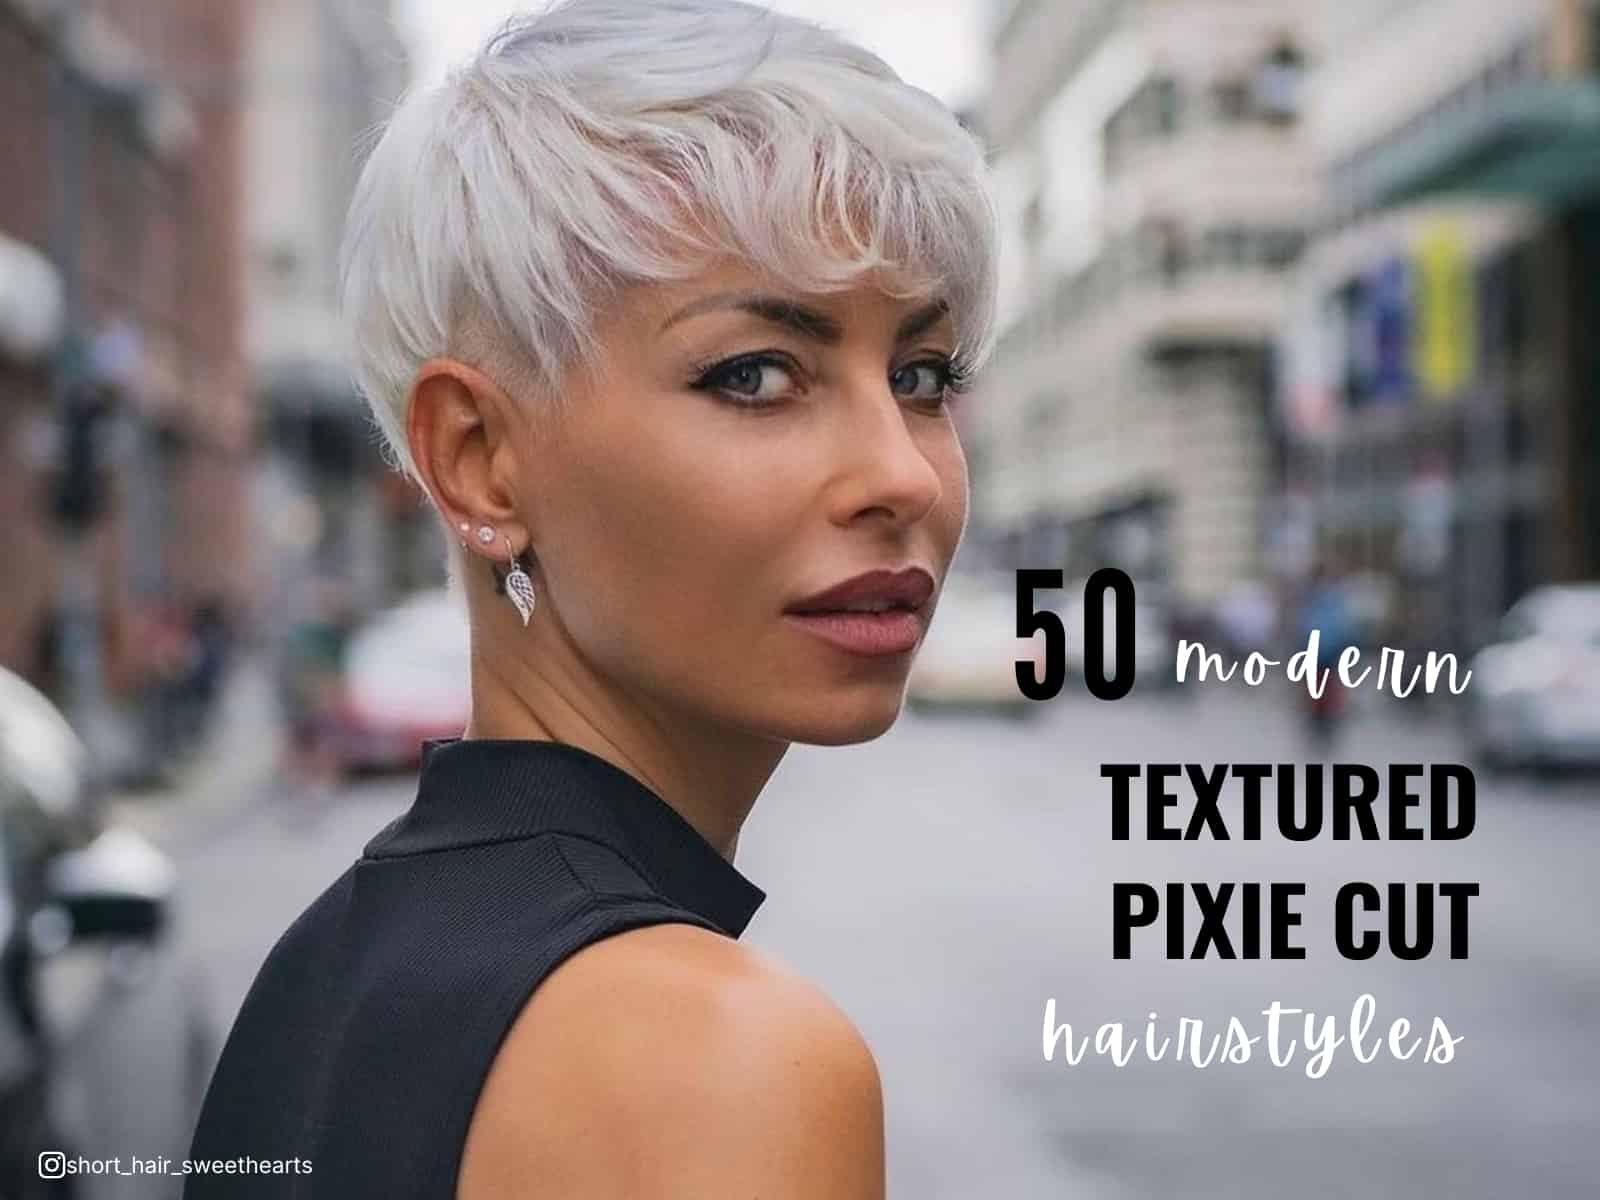 50 Moderne Acconciature Pixie Cut Textured